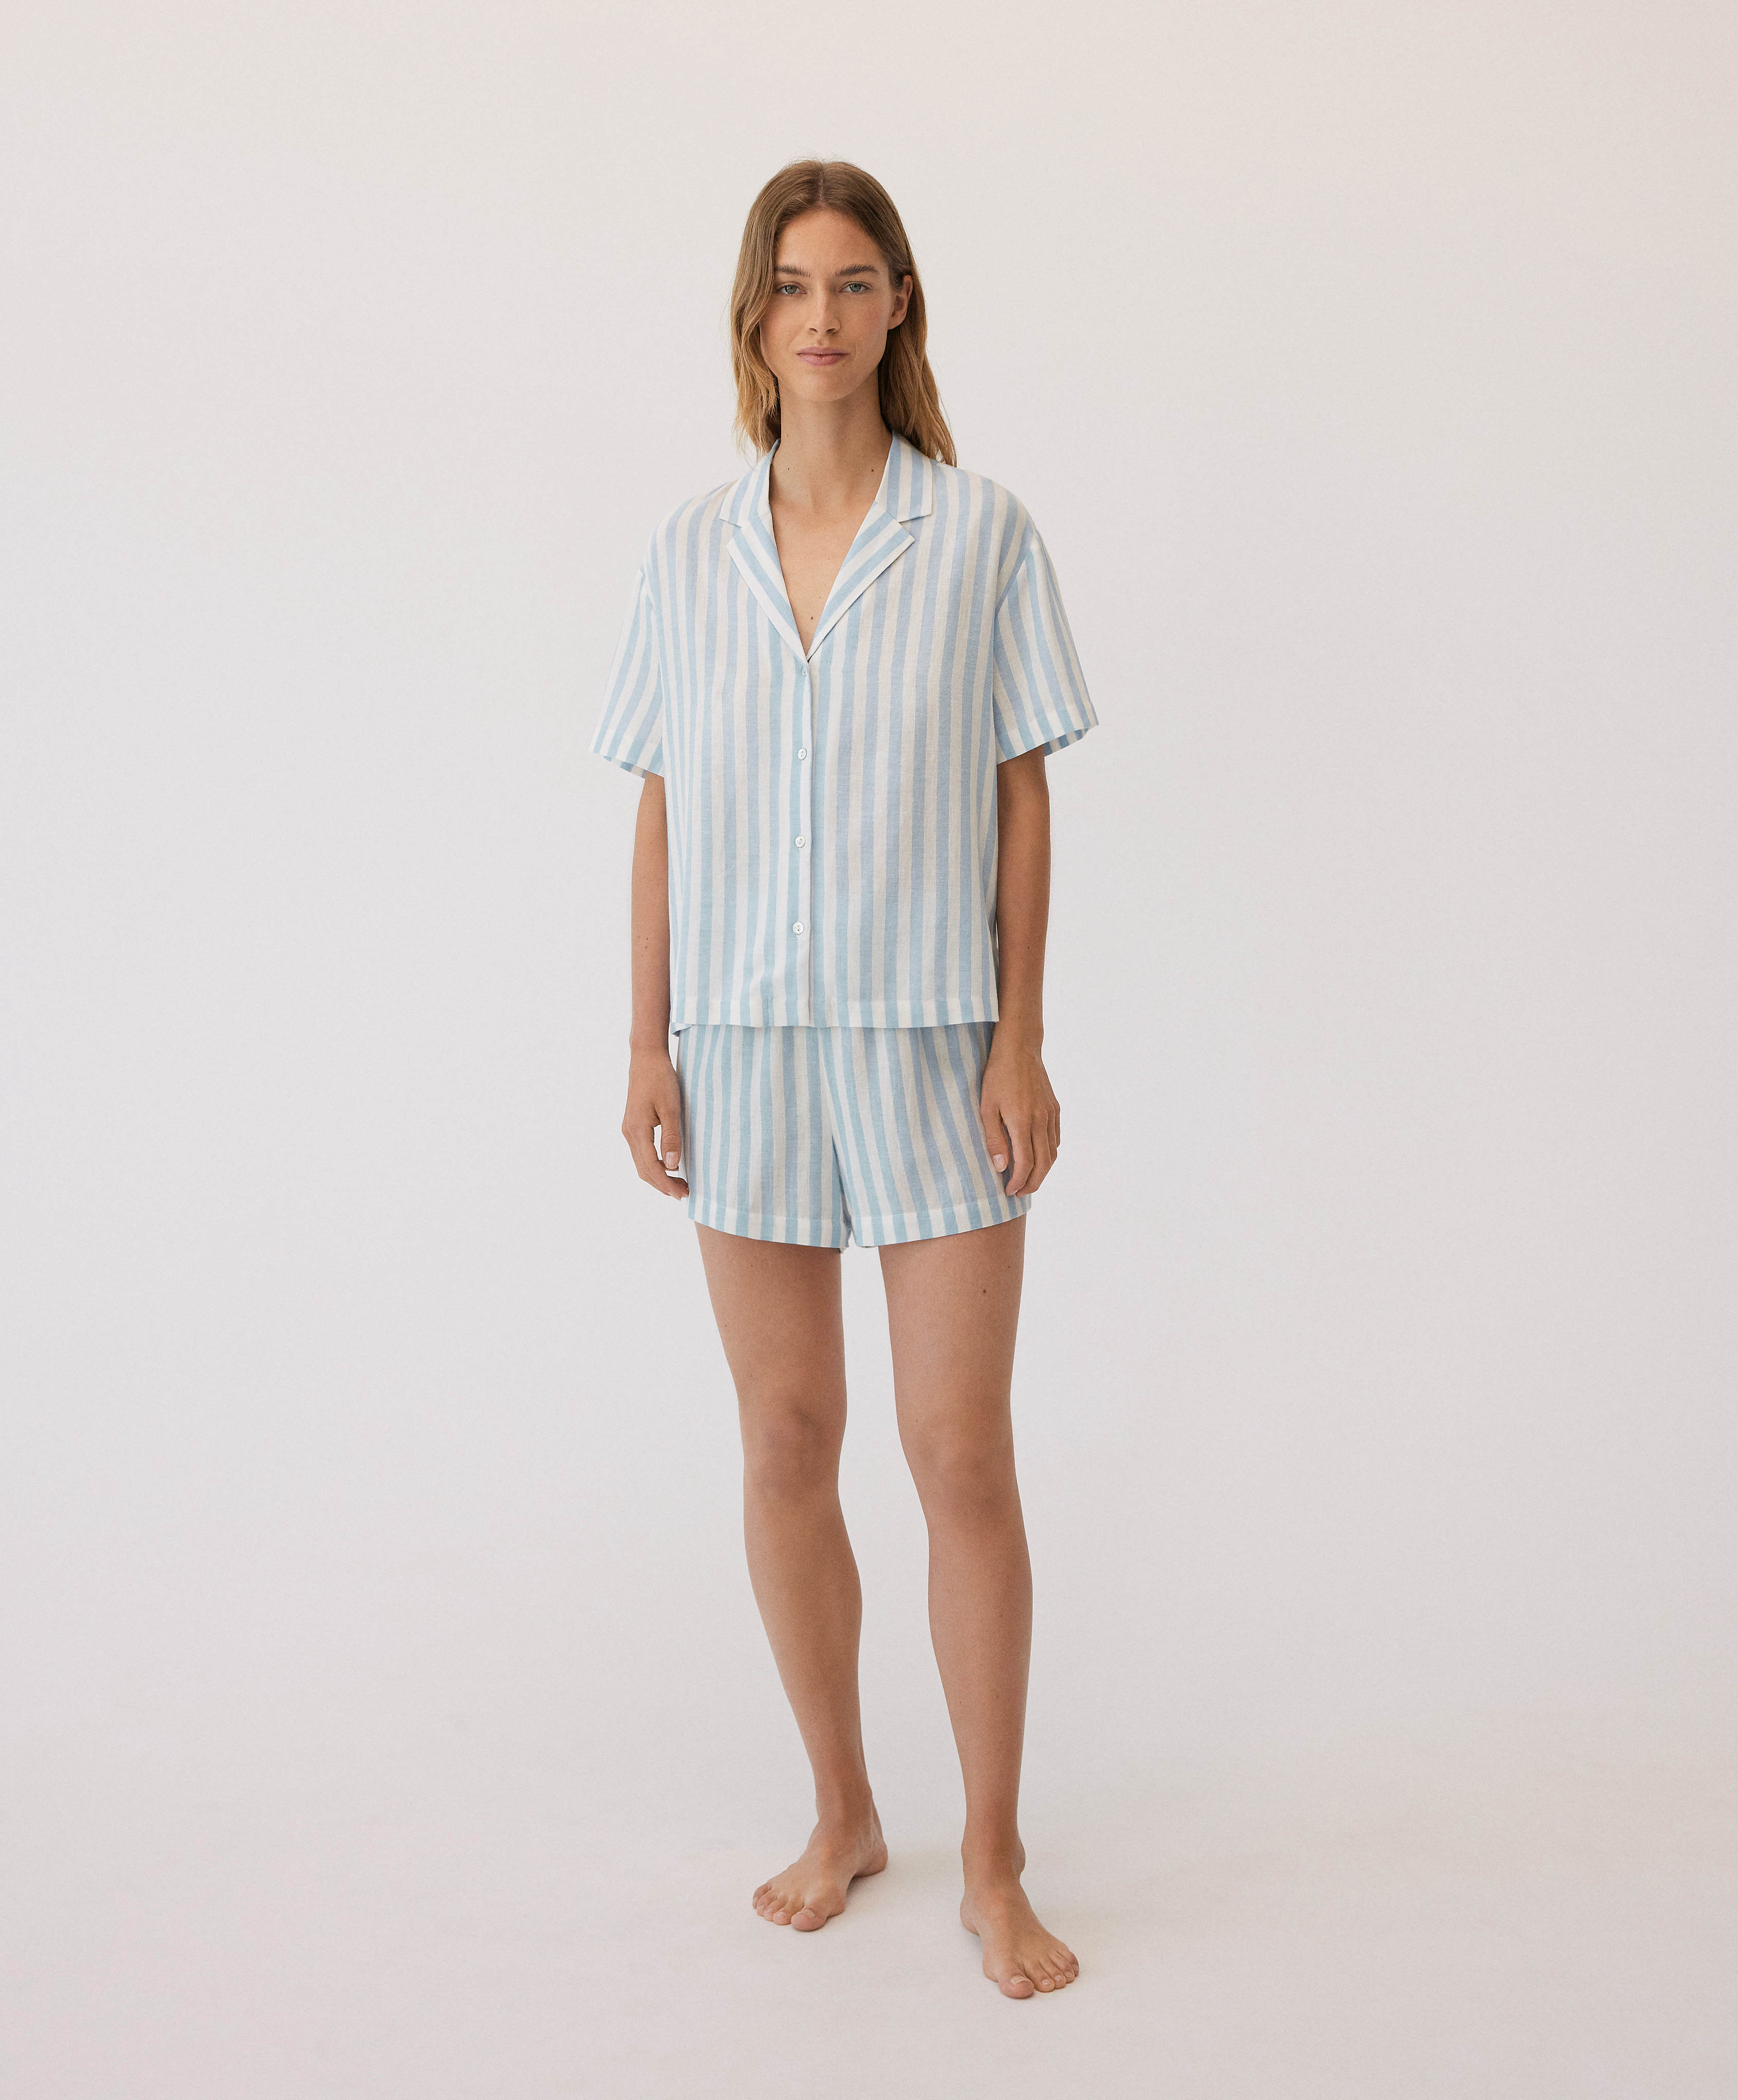 Striped cotton short shirt set